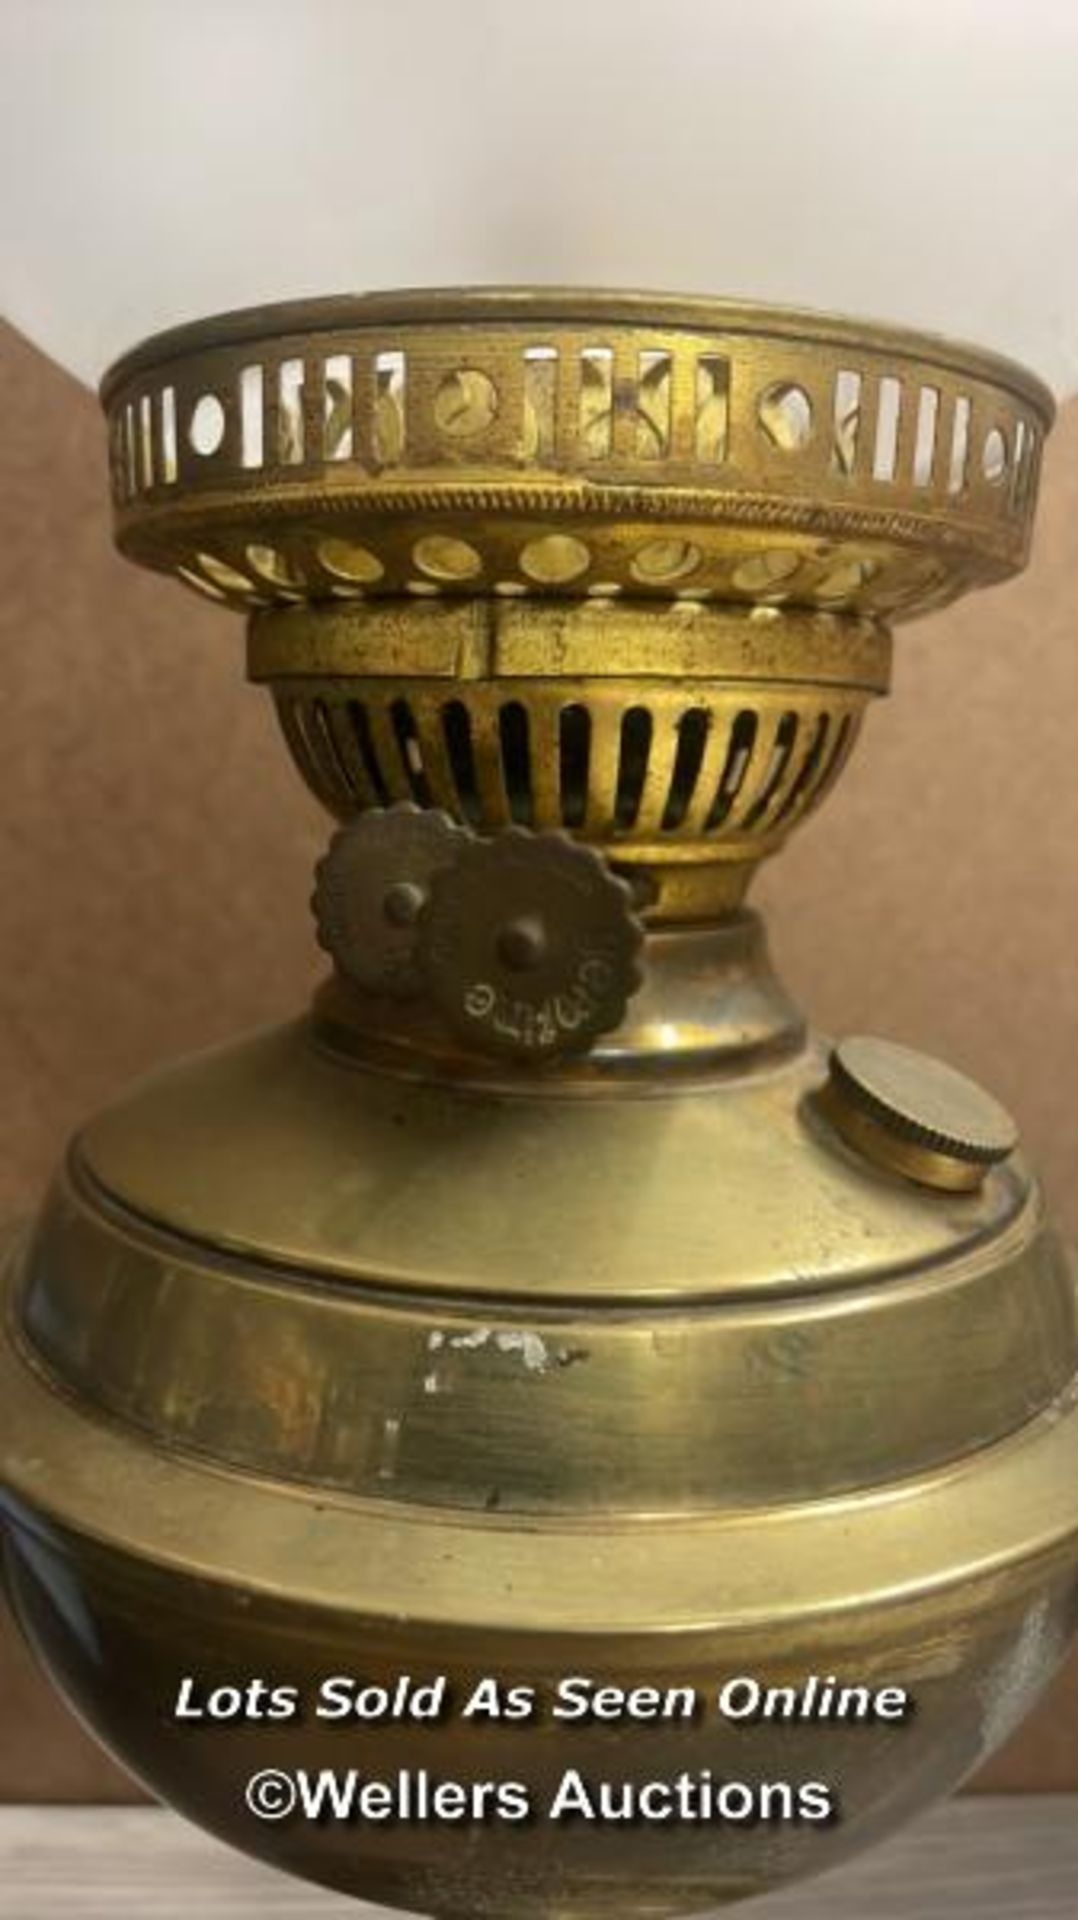 *VINTAGE GEMFINE TWIN BURNER BRASS CORINTHIAN OIL LAMP WITH GLOBE SHADE - Image 2 of 6